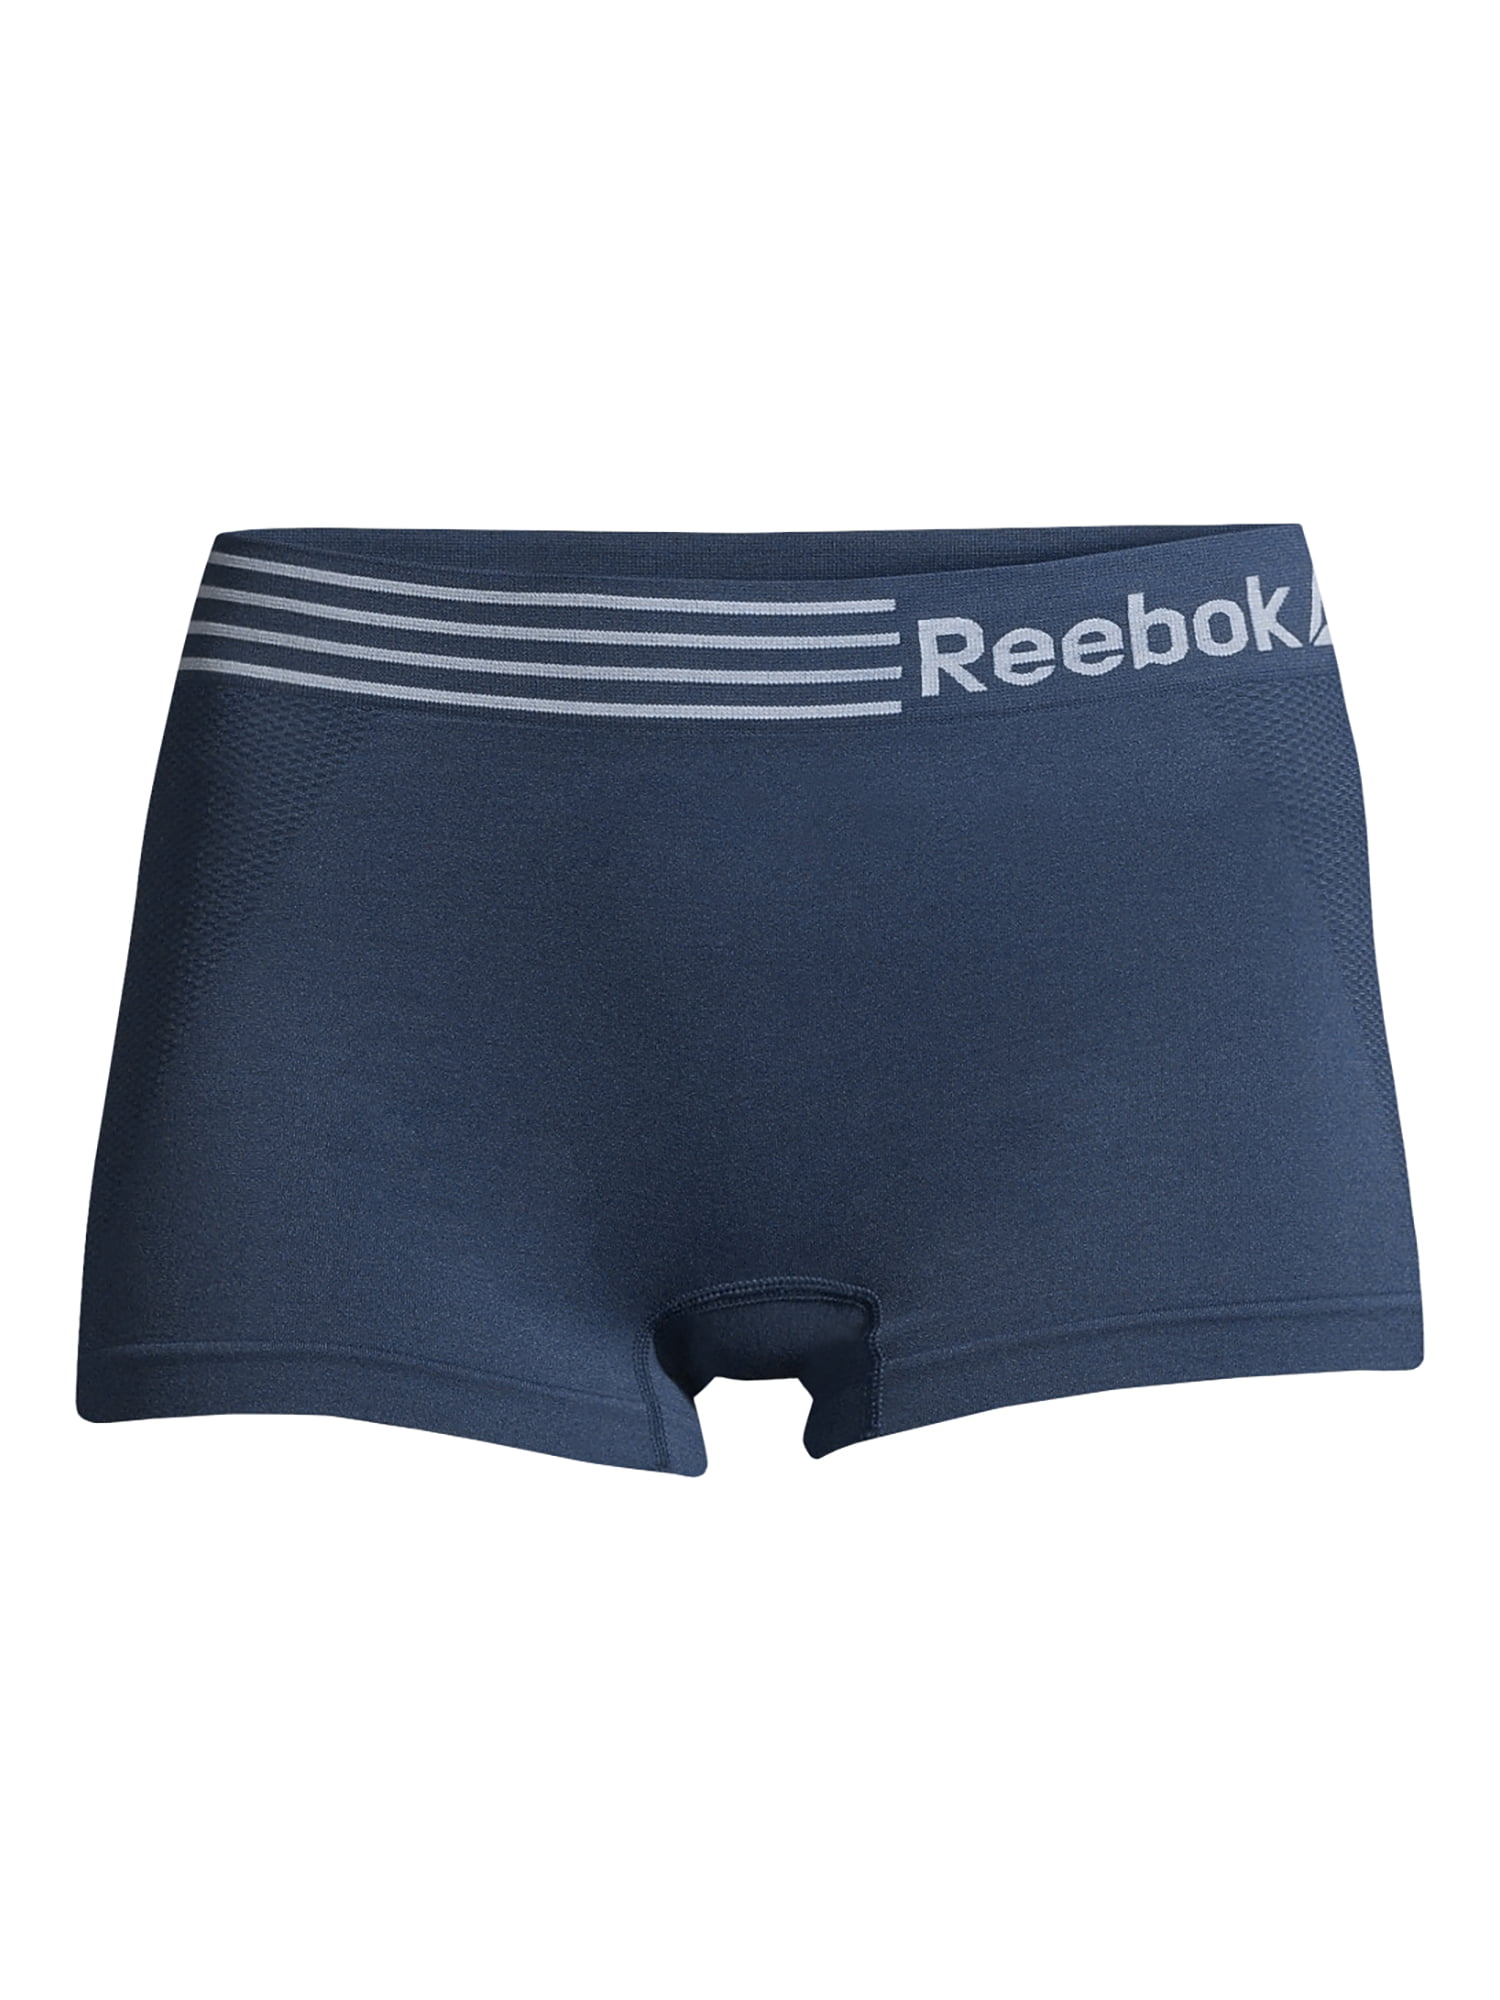 Reebok Women's Underwear Seamless Boyshort Panties, 4-Pack 